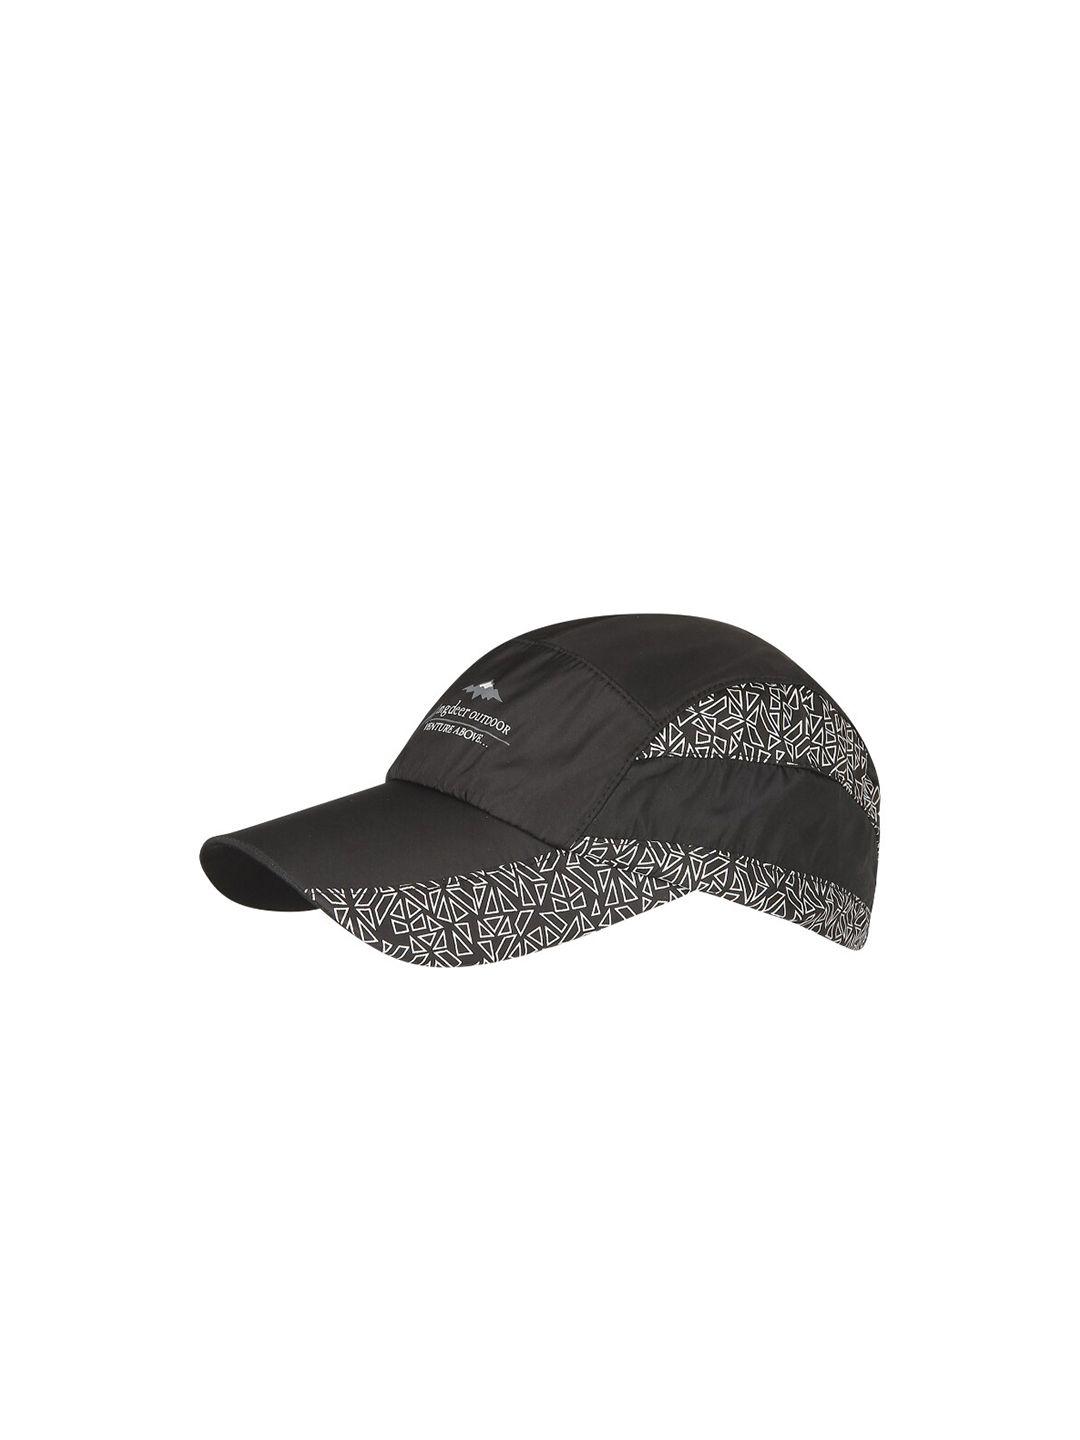 isweven black & white printed snapback cap